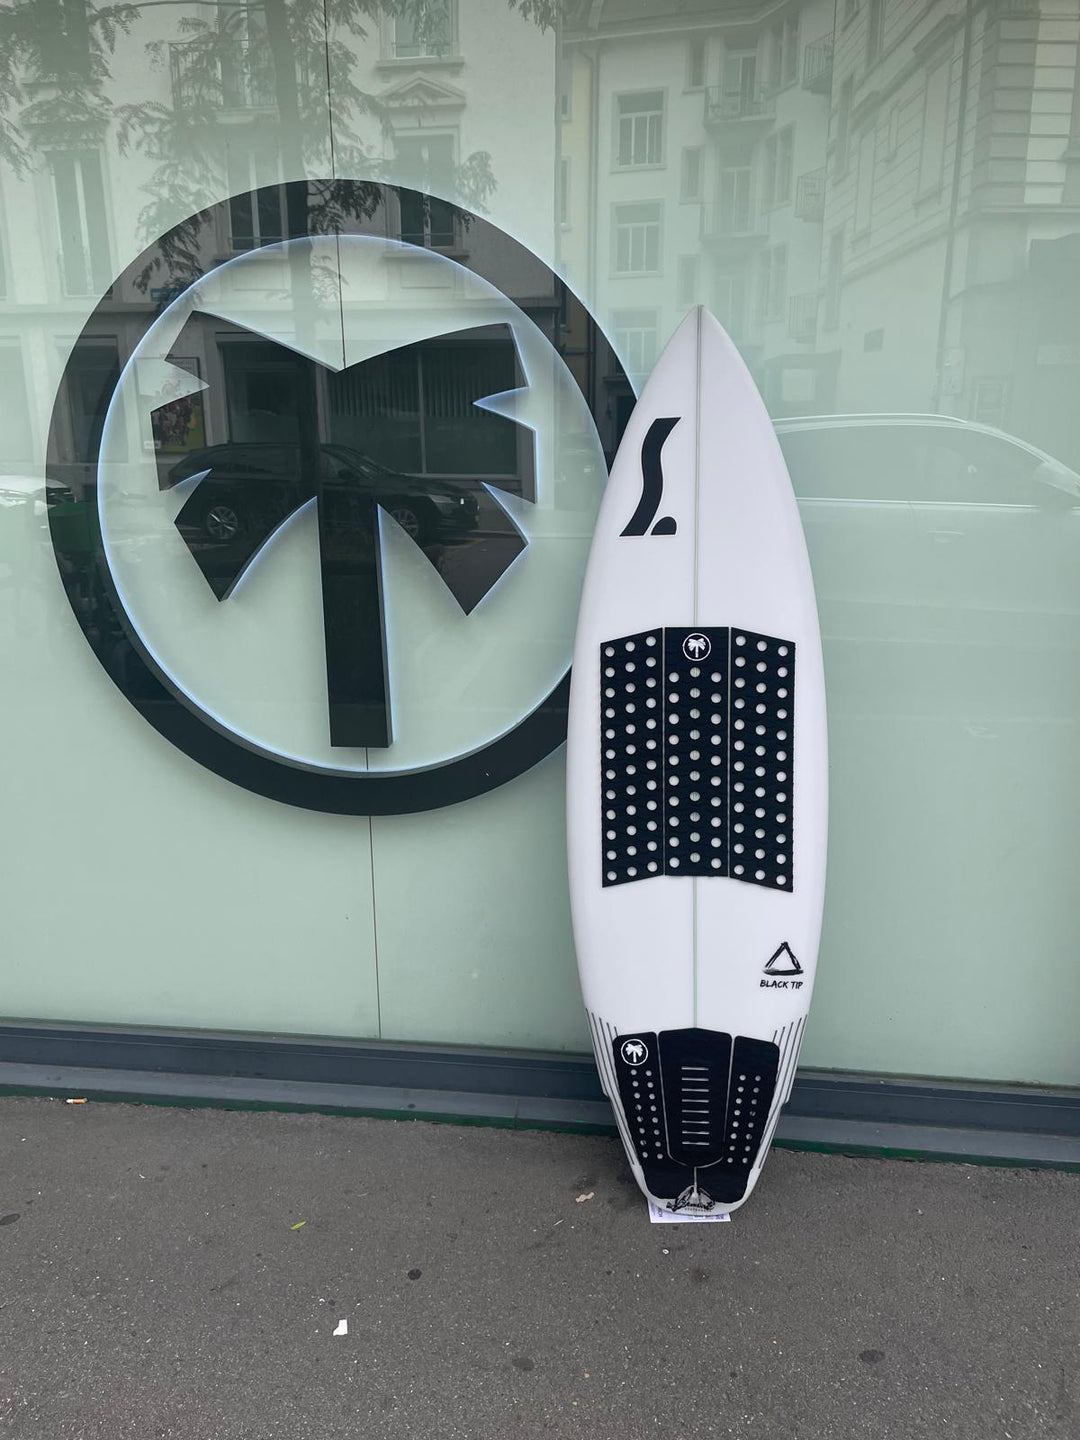 Semente Surfboards Black Tip 5'5"(Occasion)